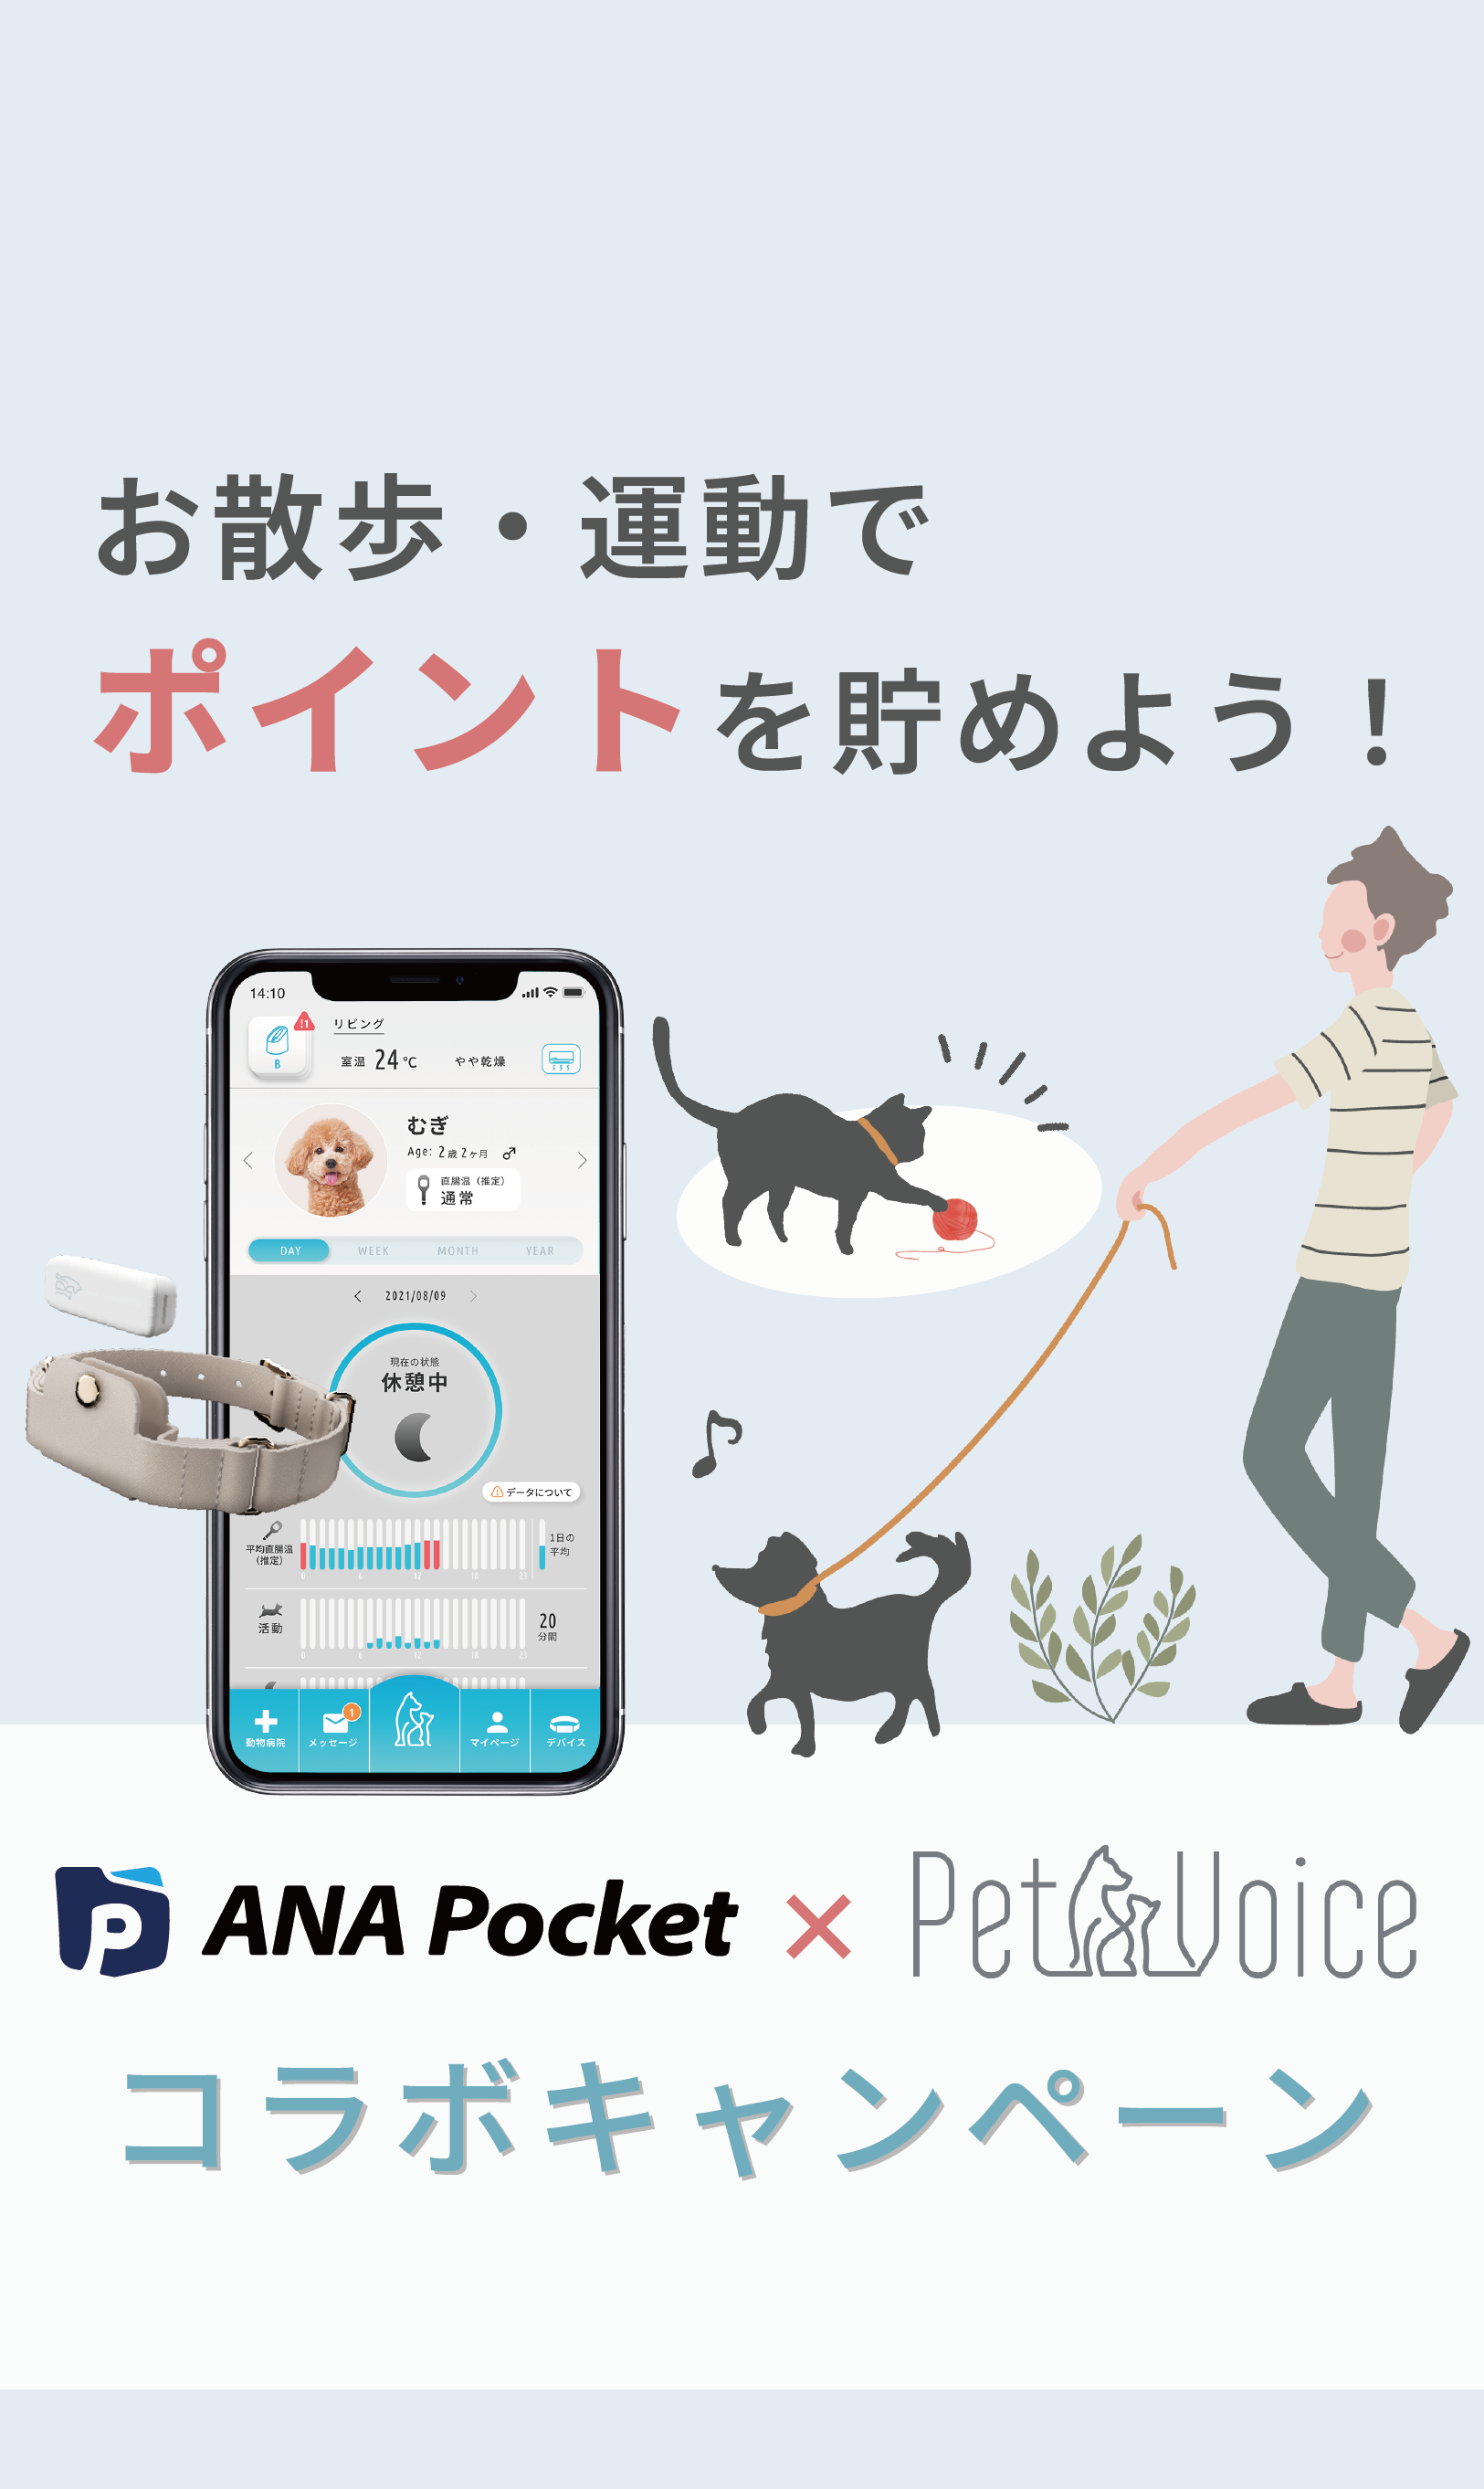 PetVoiceを着けてお散歩・運動でANA Pocketポイント付与